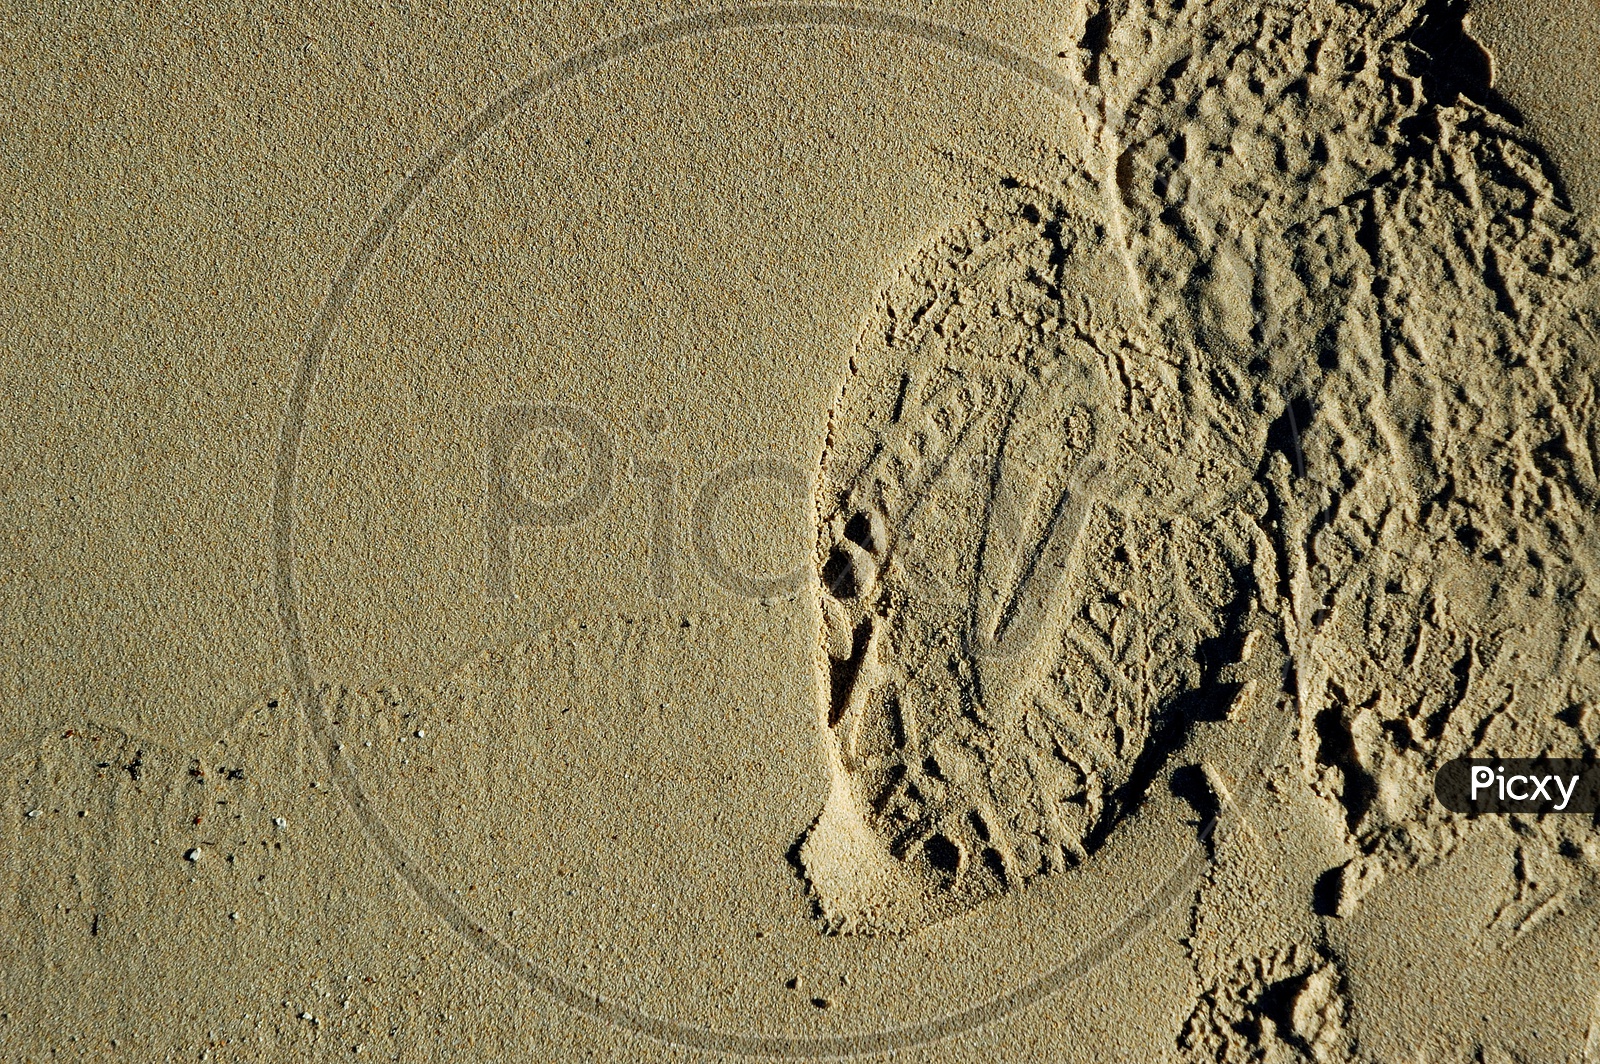 Shoe prints on Sand